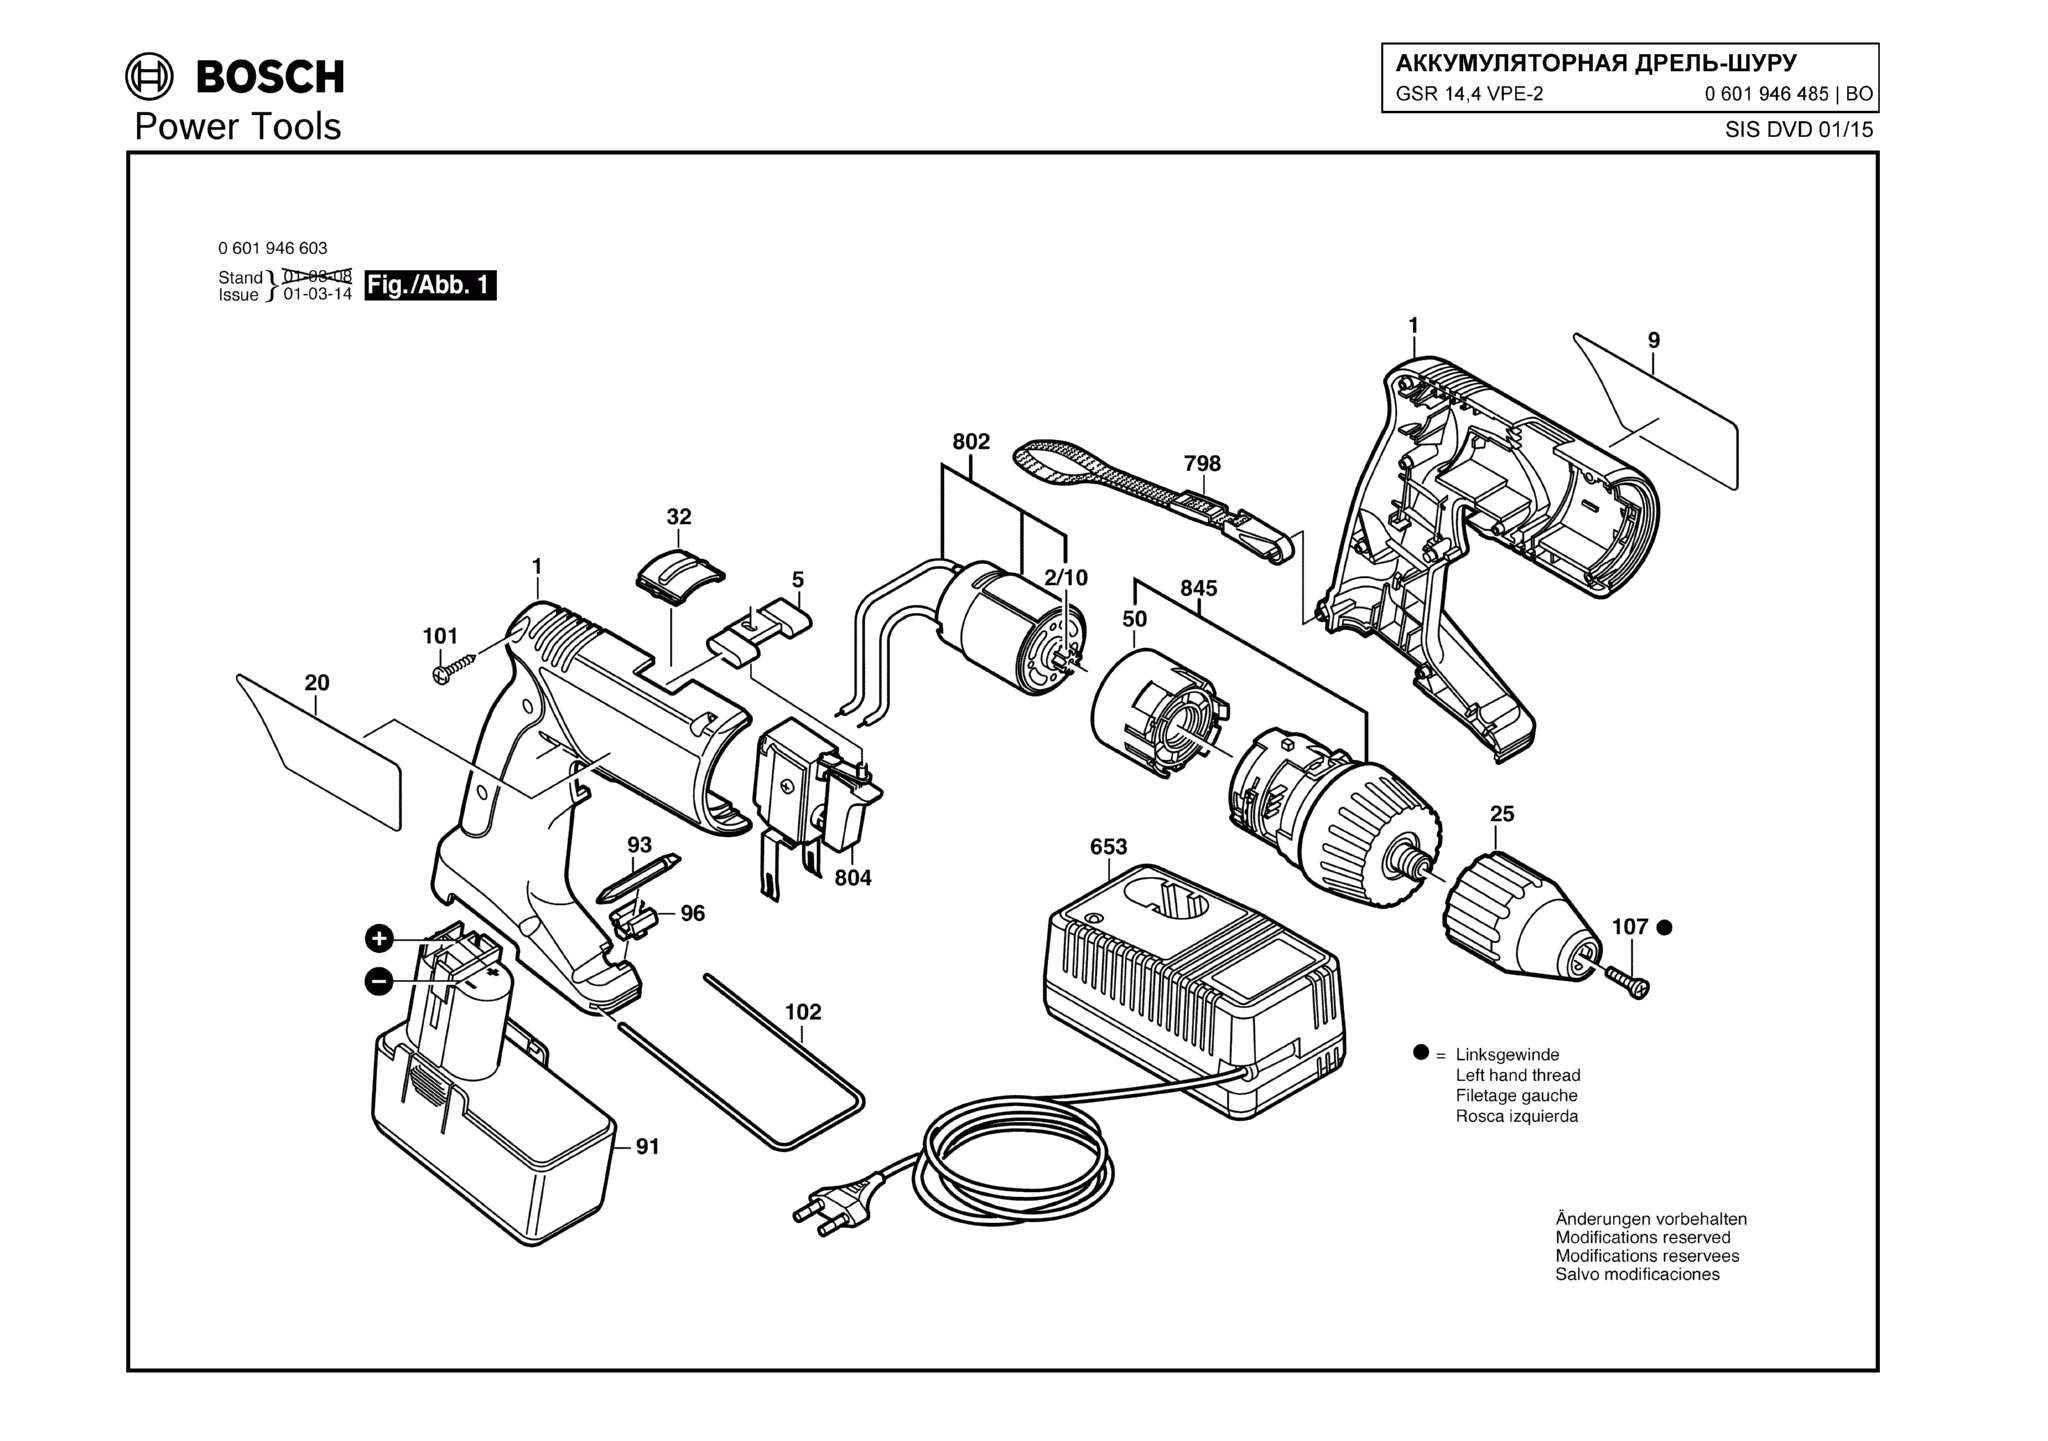 Запчасти, схема и деталировка Bosch GSR 14,4 VPE-2 (ТИП 0601946485)